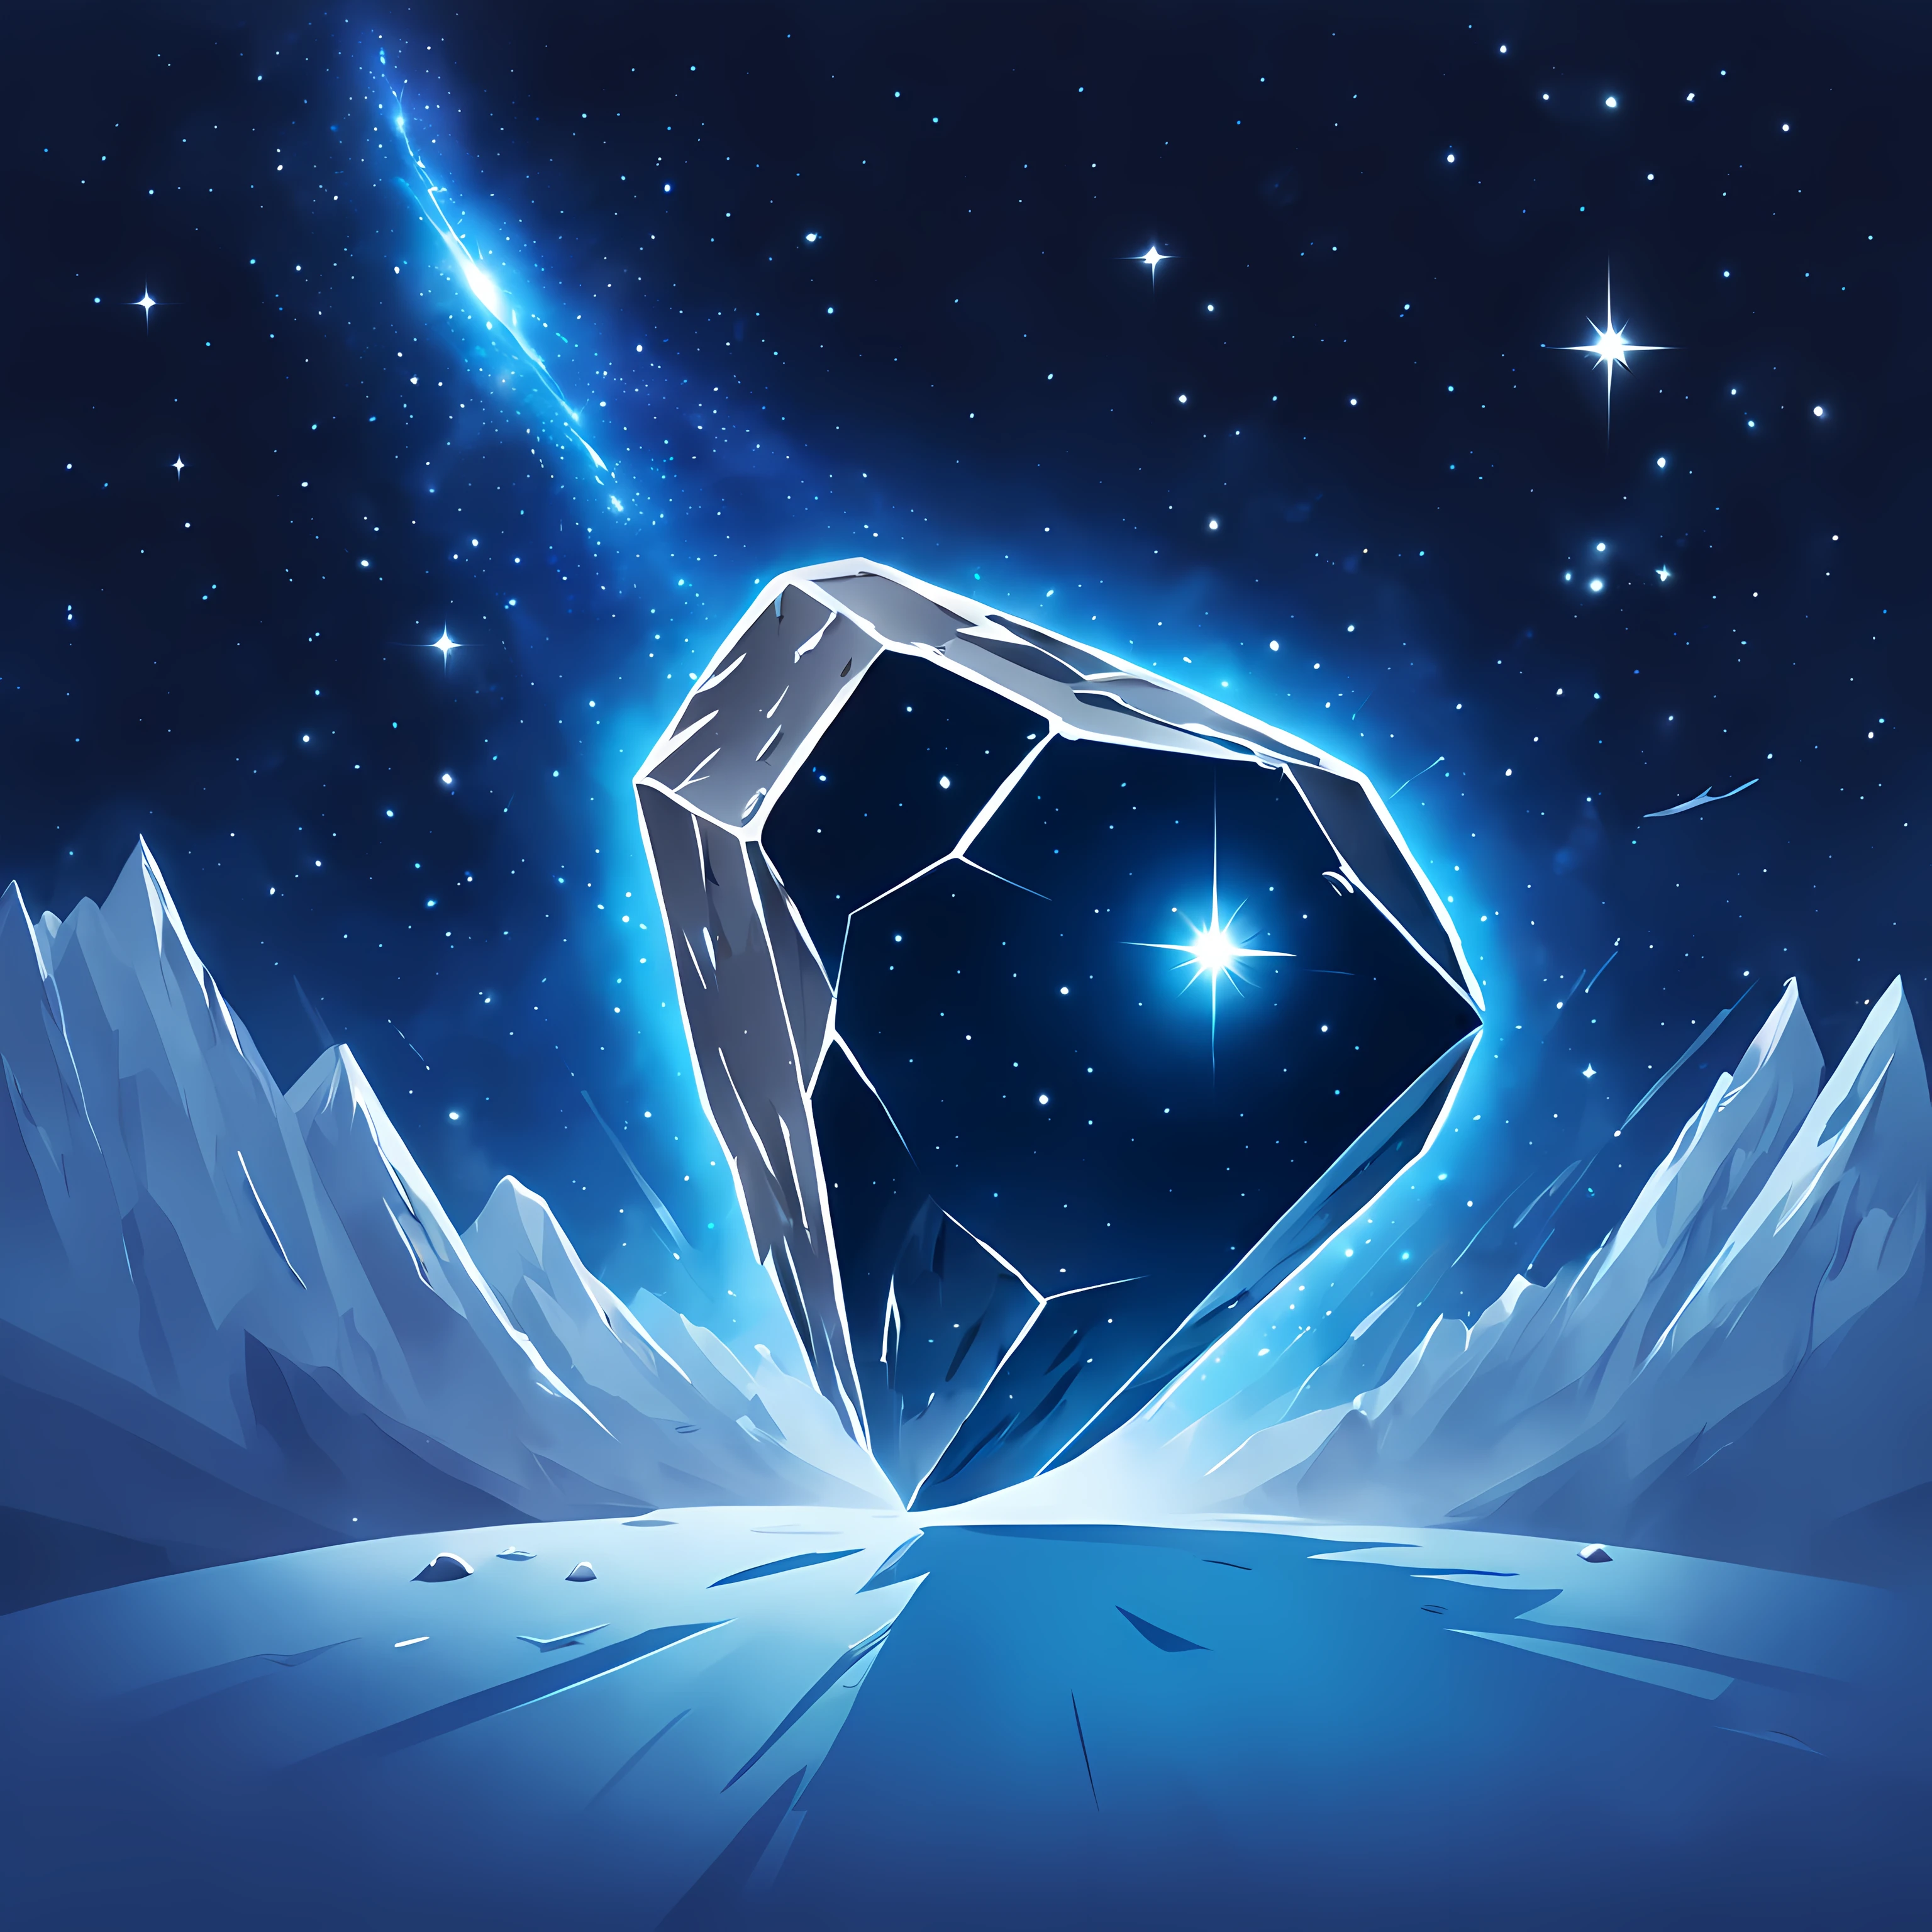 Logo, A (riesig) rectAngulAr Logo of A shiny blue ((riesig icy meteorite)) with long distinct trAil, (((breAthtAking stArry cosmic bAckground))), ((mysticAl tAigA)), Epos, trAvelers, LogoRedAF